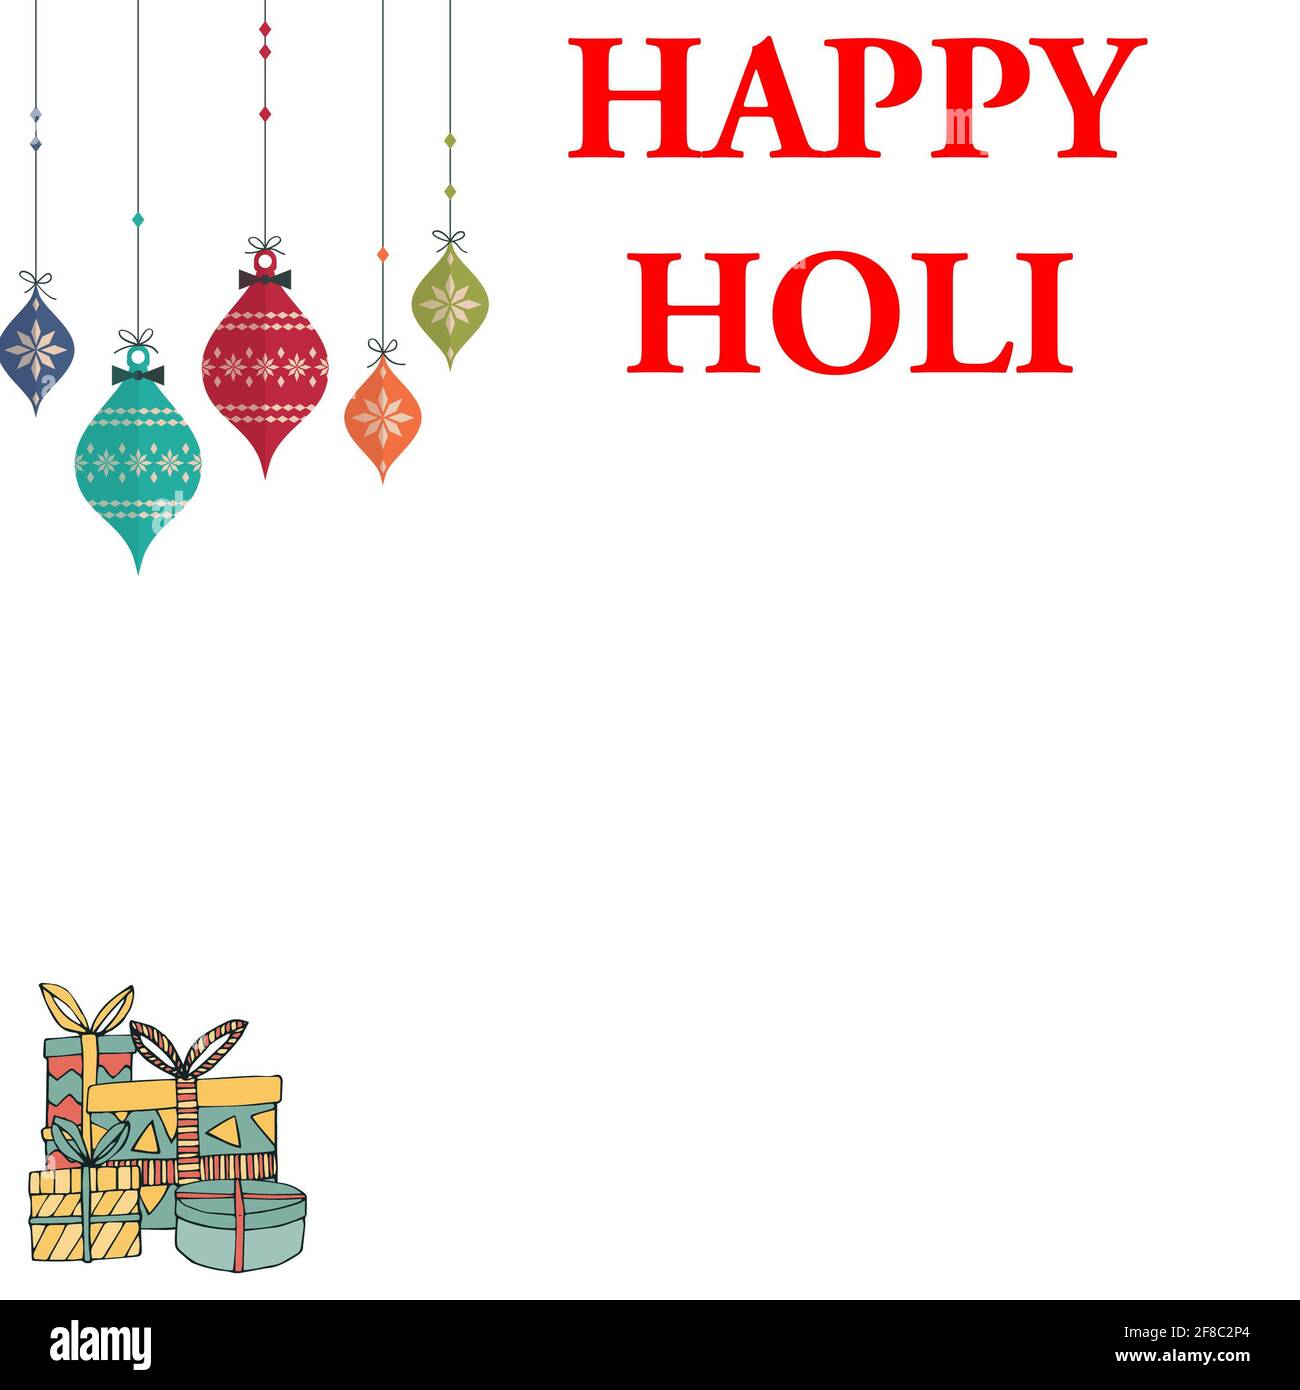 Illustration art banner greeting Card Making for  indian festival happy Holi gift Stock Photo